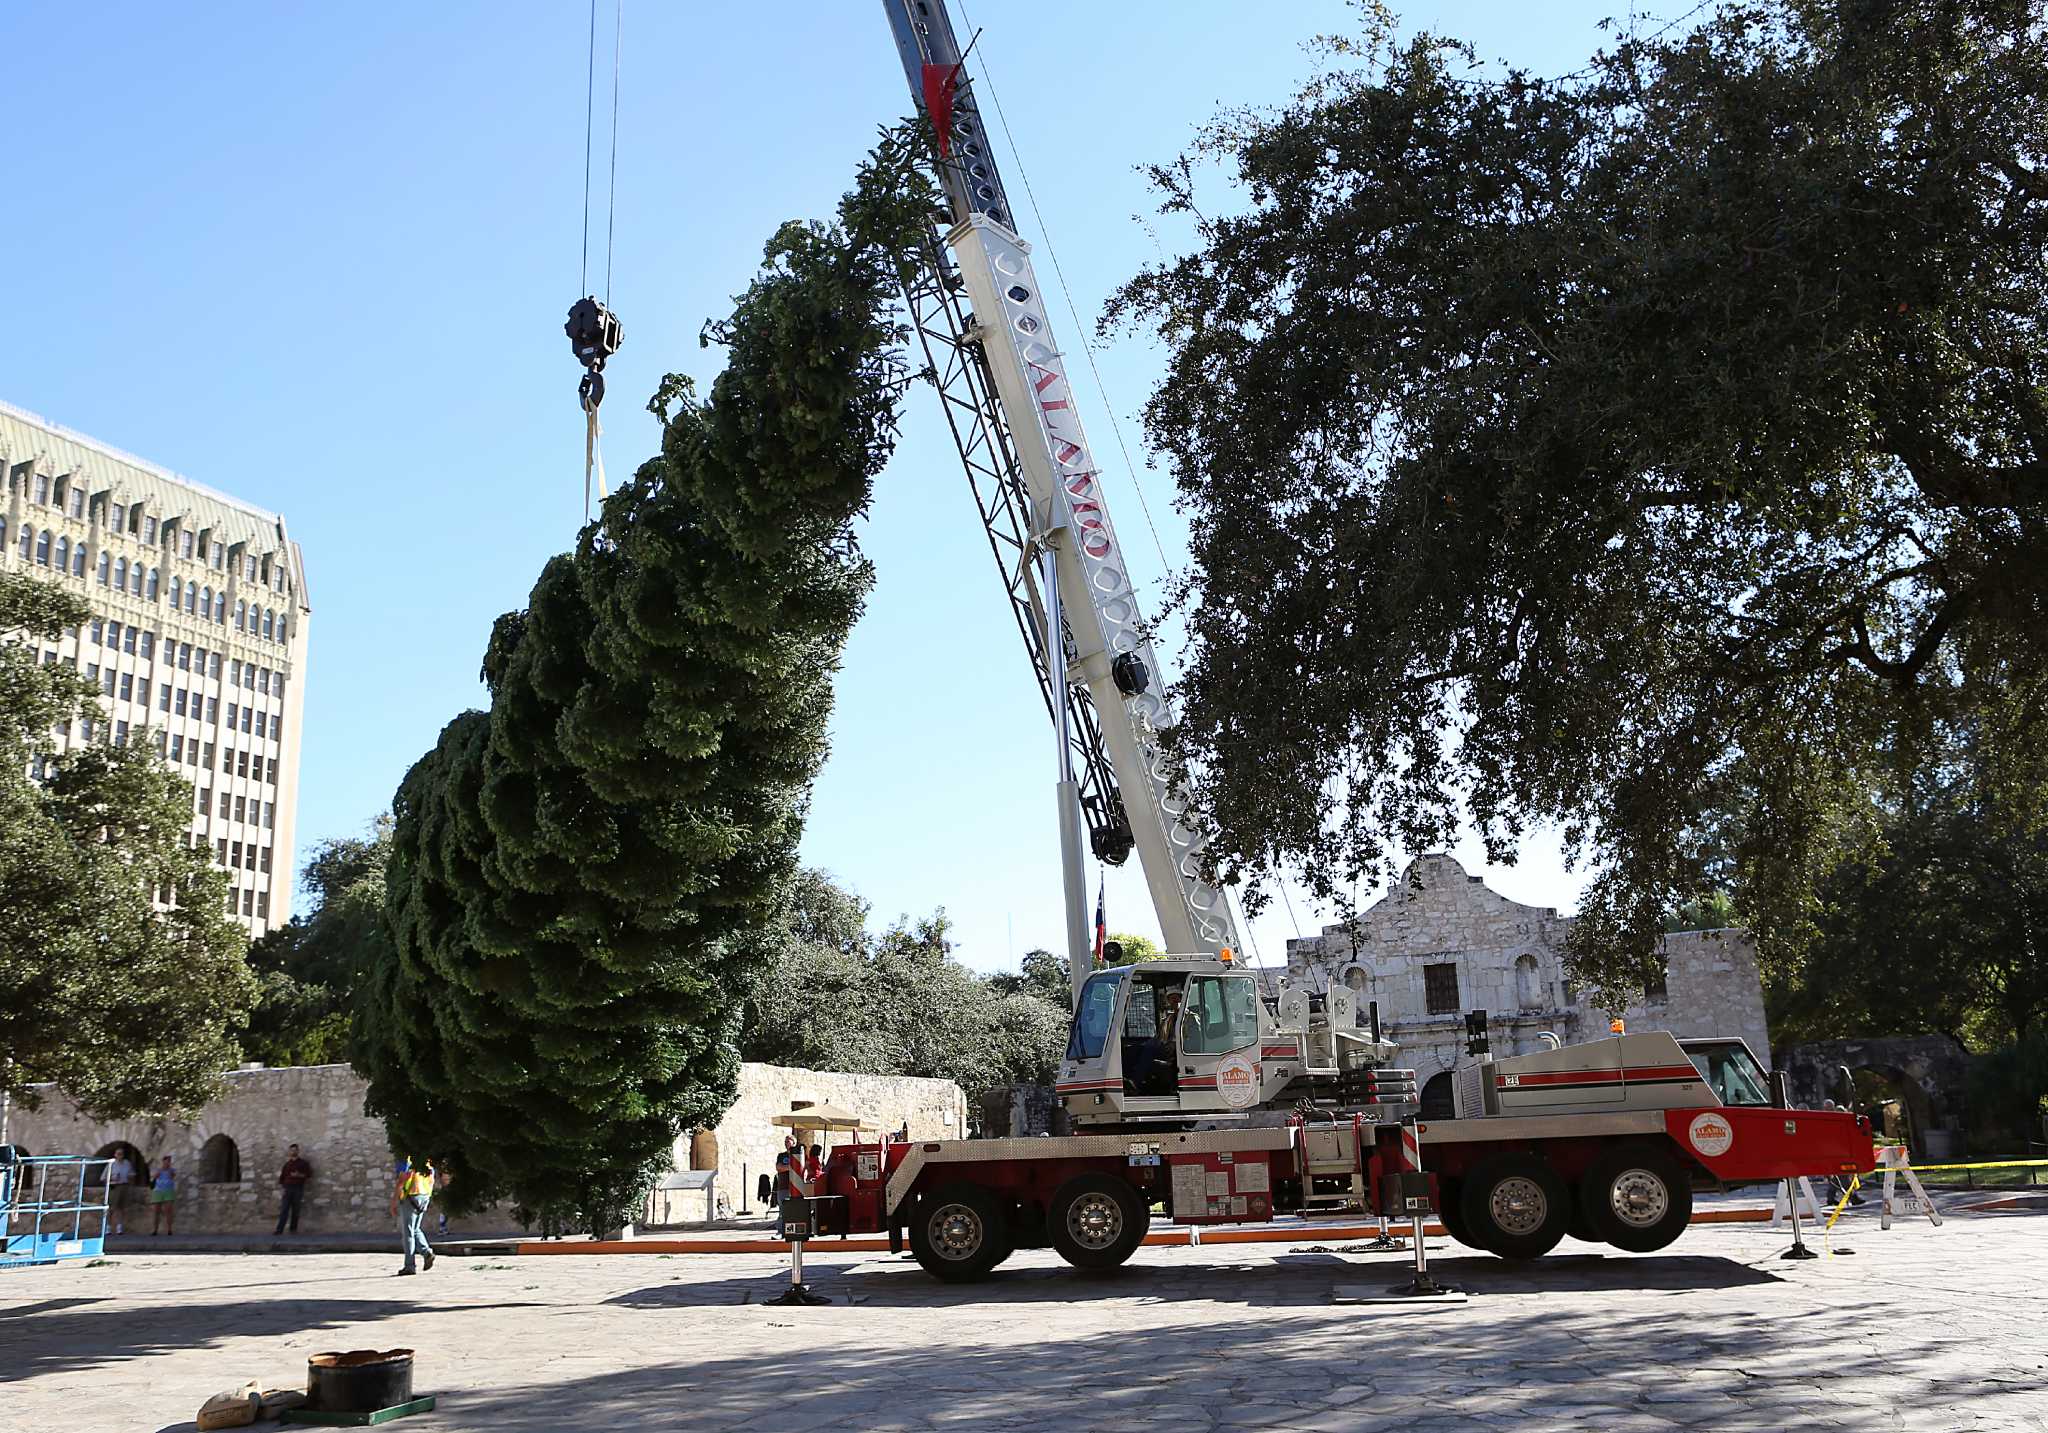 Photos: 55-foot Christmas tree erected at Alamo Plaza - San Antonio Express-News